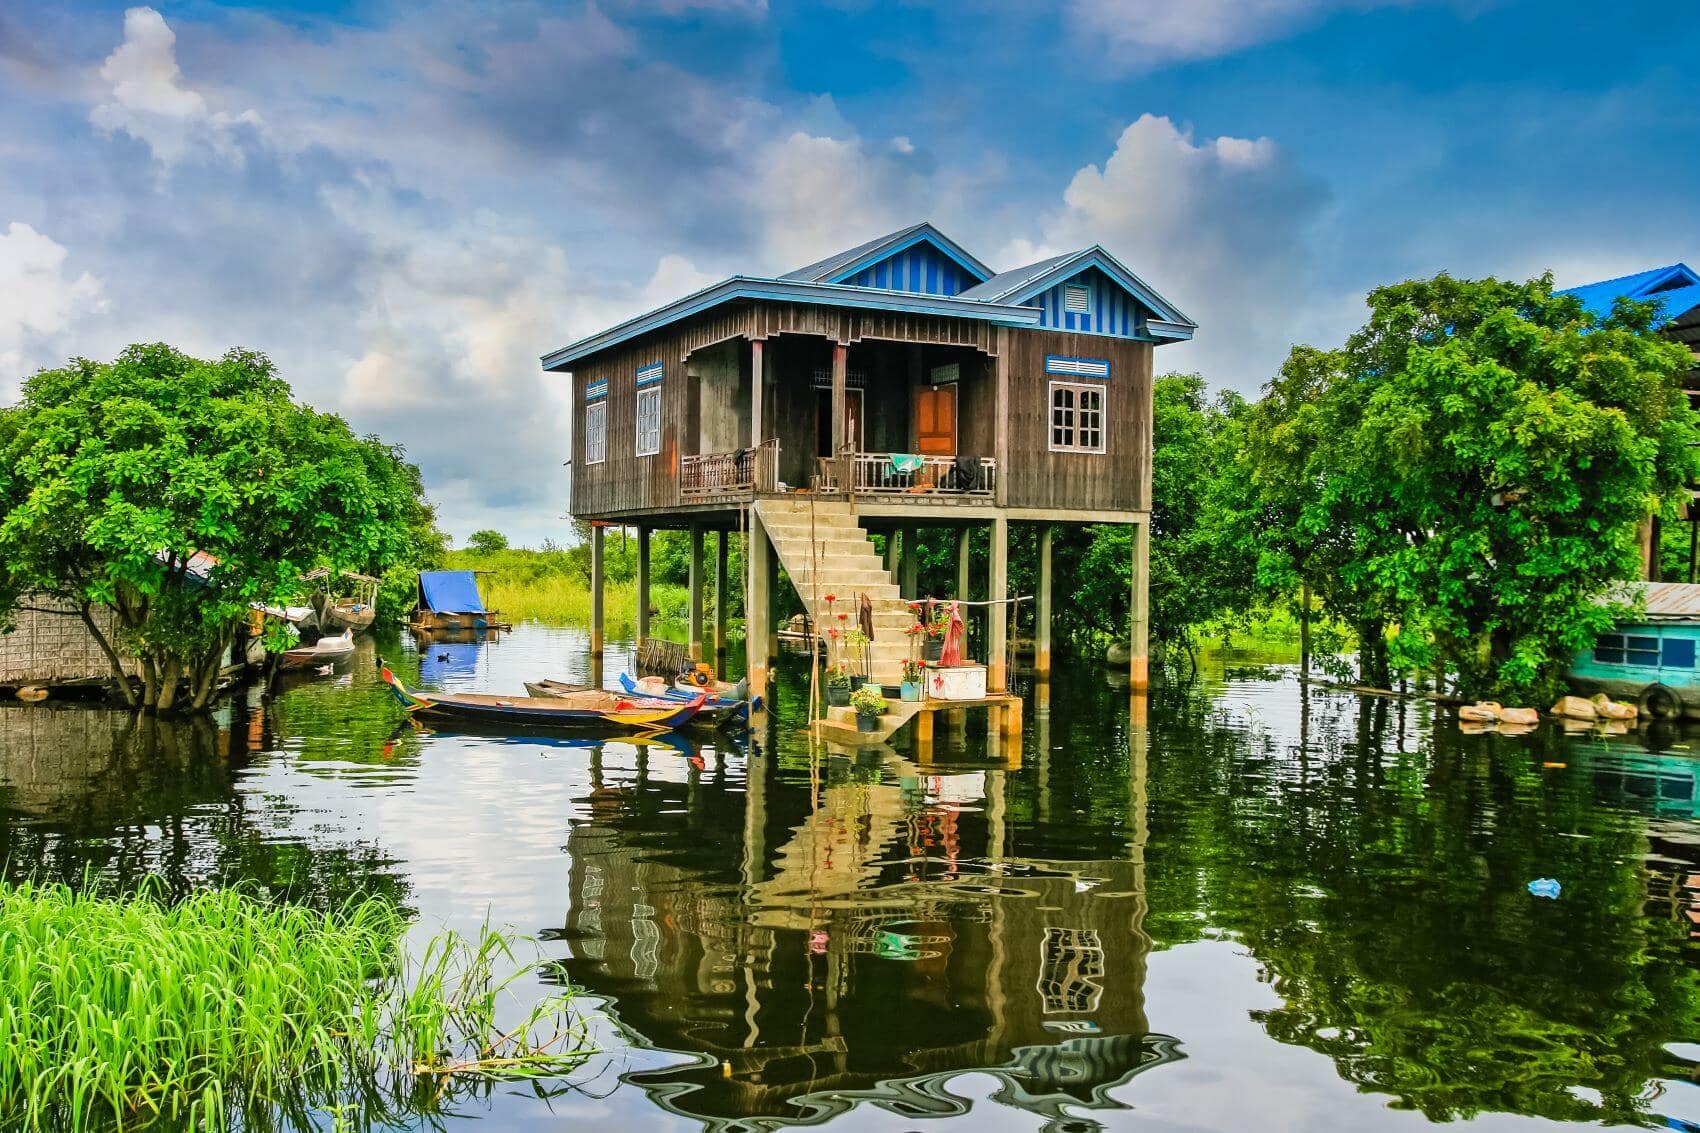 Haus auf Stelzen See Tonle Sap in Kambodscha 